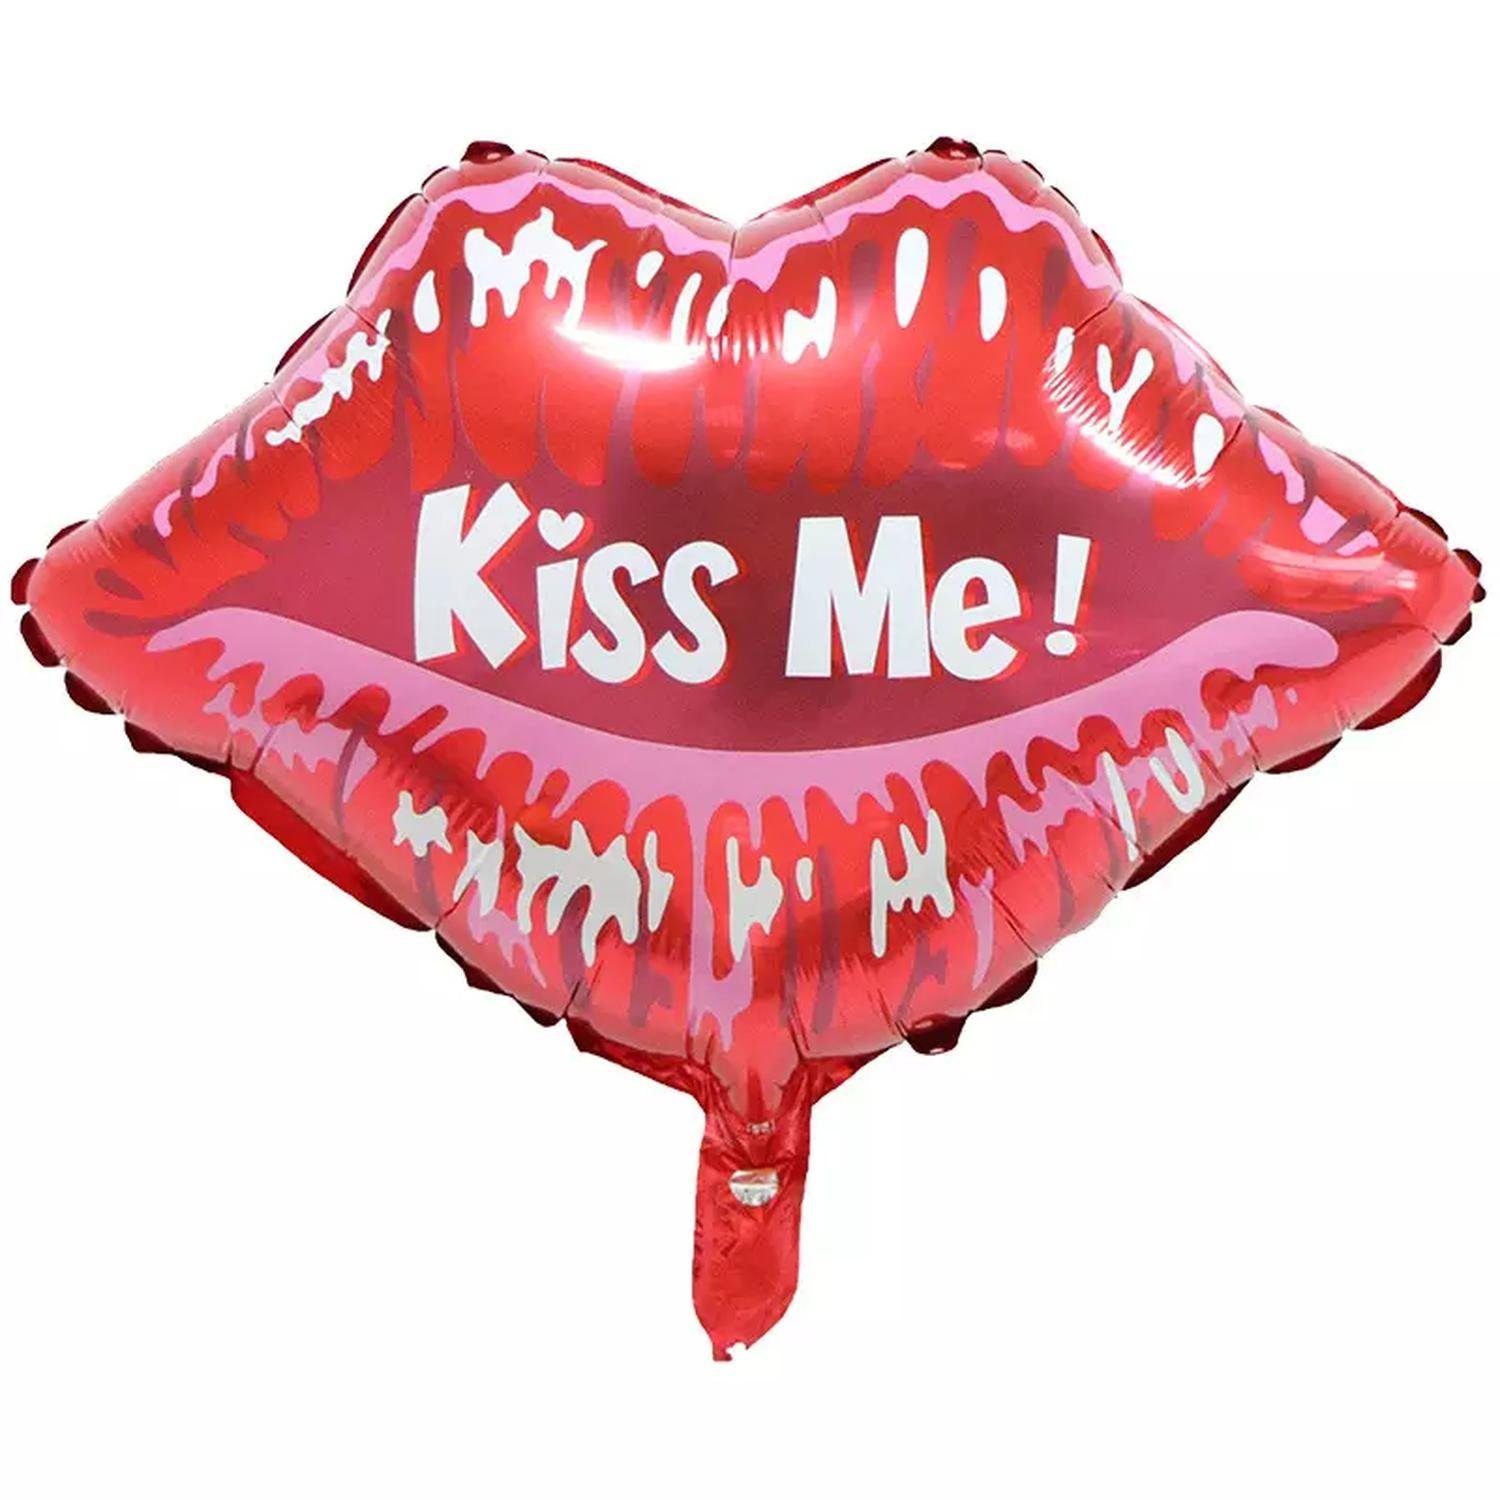 Kopper-24 Folienballon Folienballon Lippen, Kiss Me! rot, ca. 58 x 51 cm